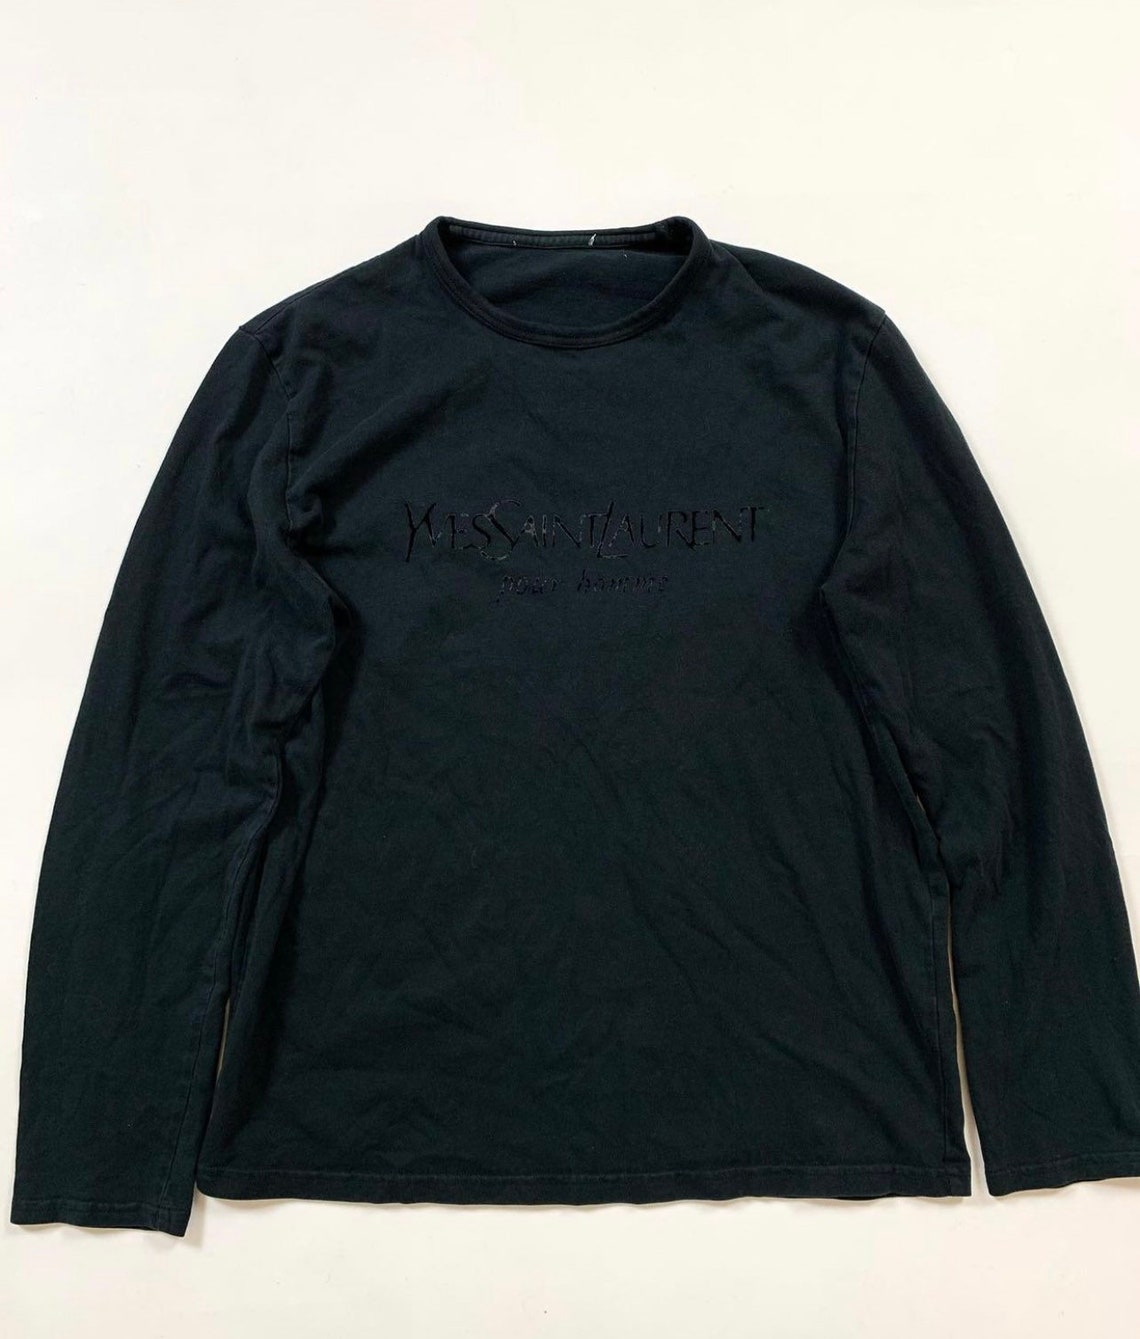 Yves saint Laurent vintage pullover sweater YSL long sleeve | Etsy